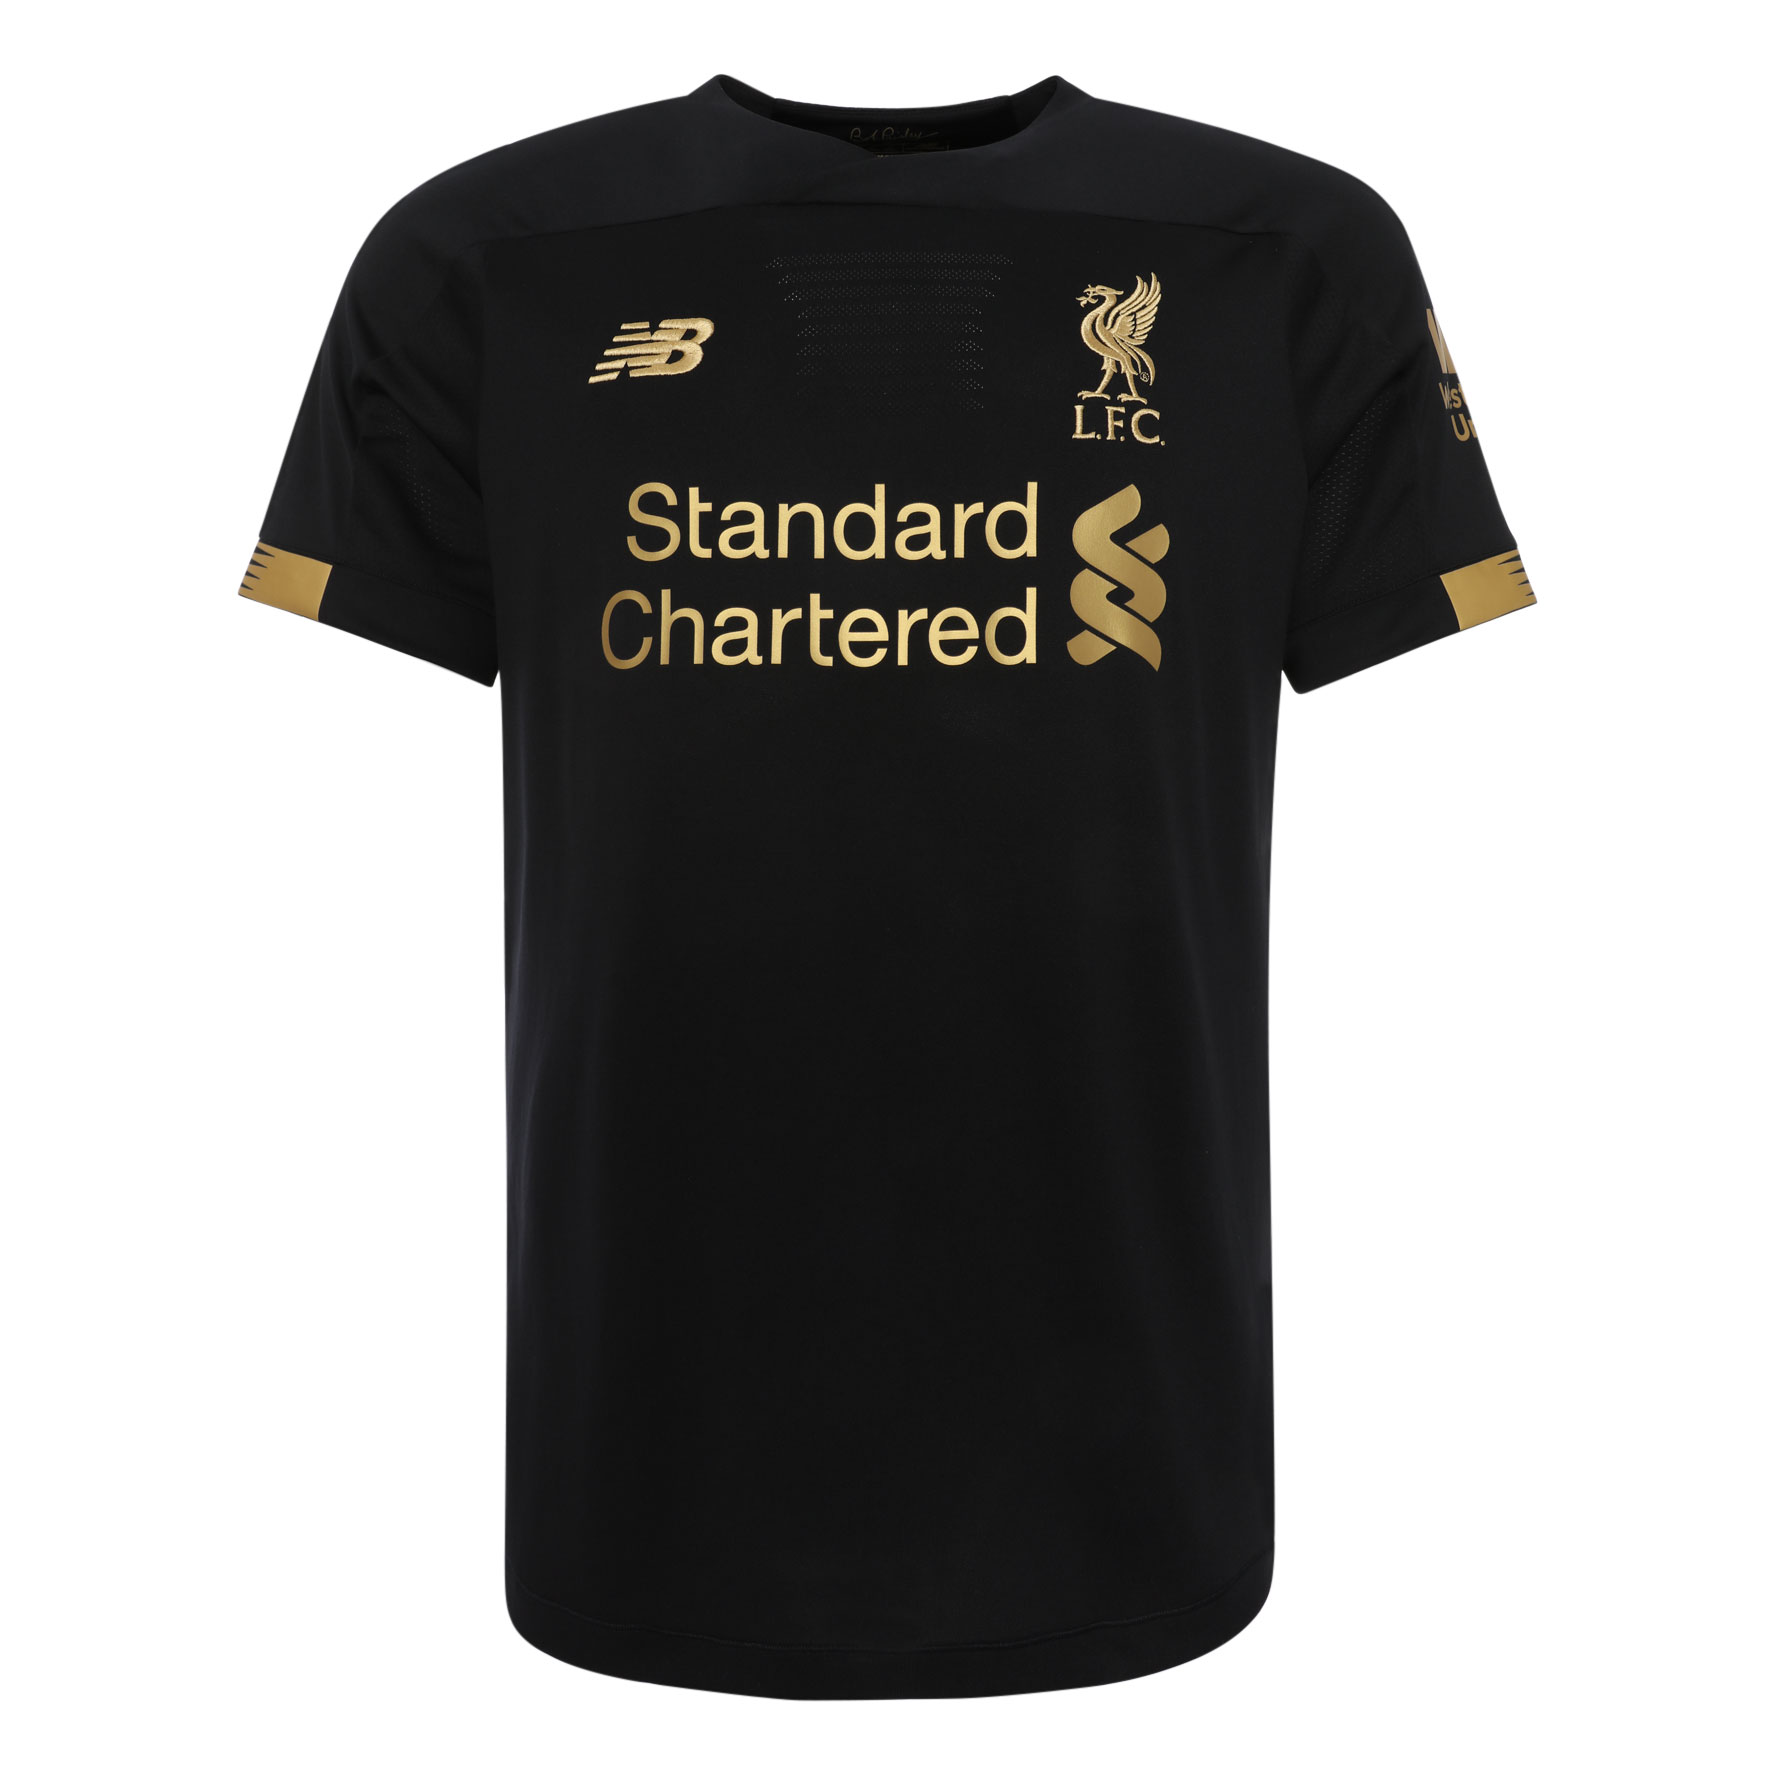 new Liverpool kit